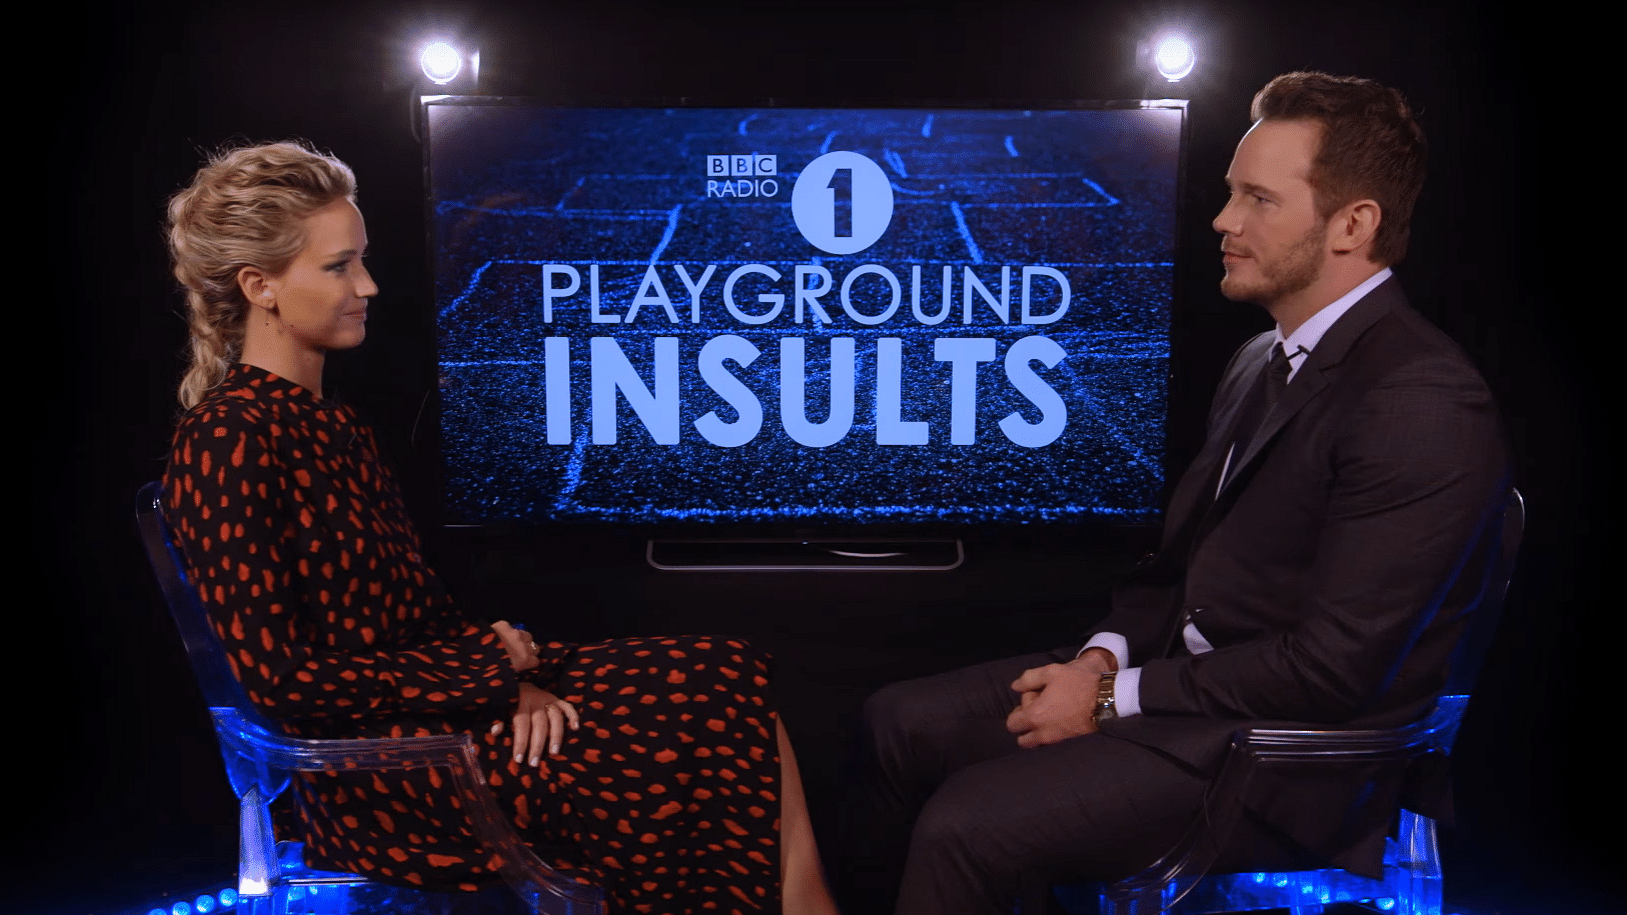 Chris Pratt and Jennifer Lawrence on BBC Radio’s Playground Insults. (Photo: YouTube screenshot)&nbsp;